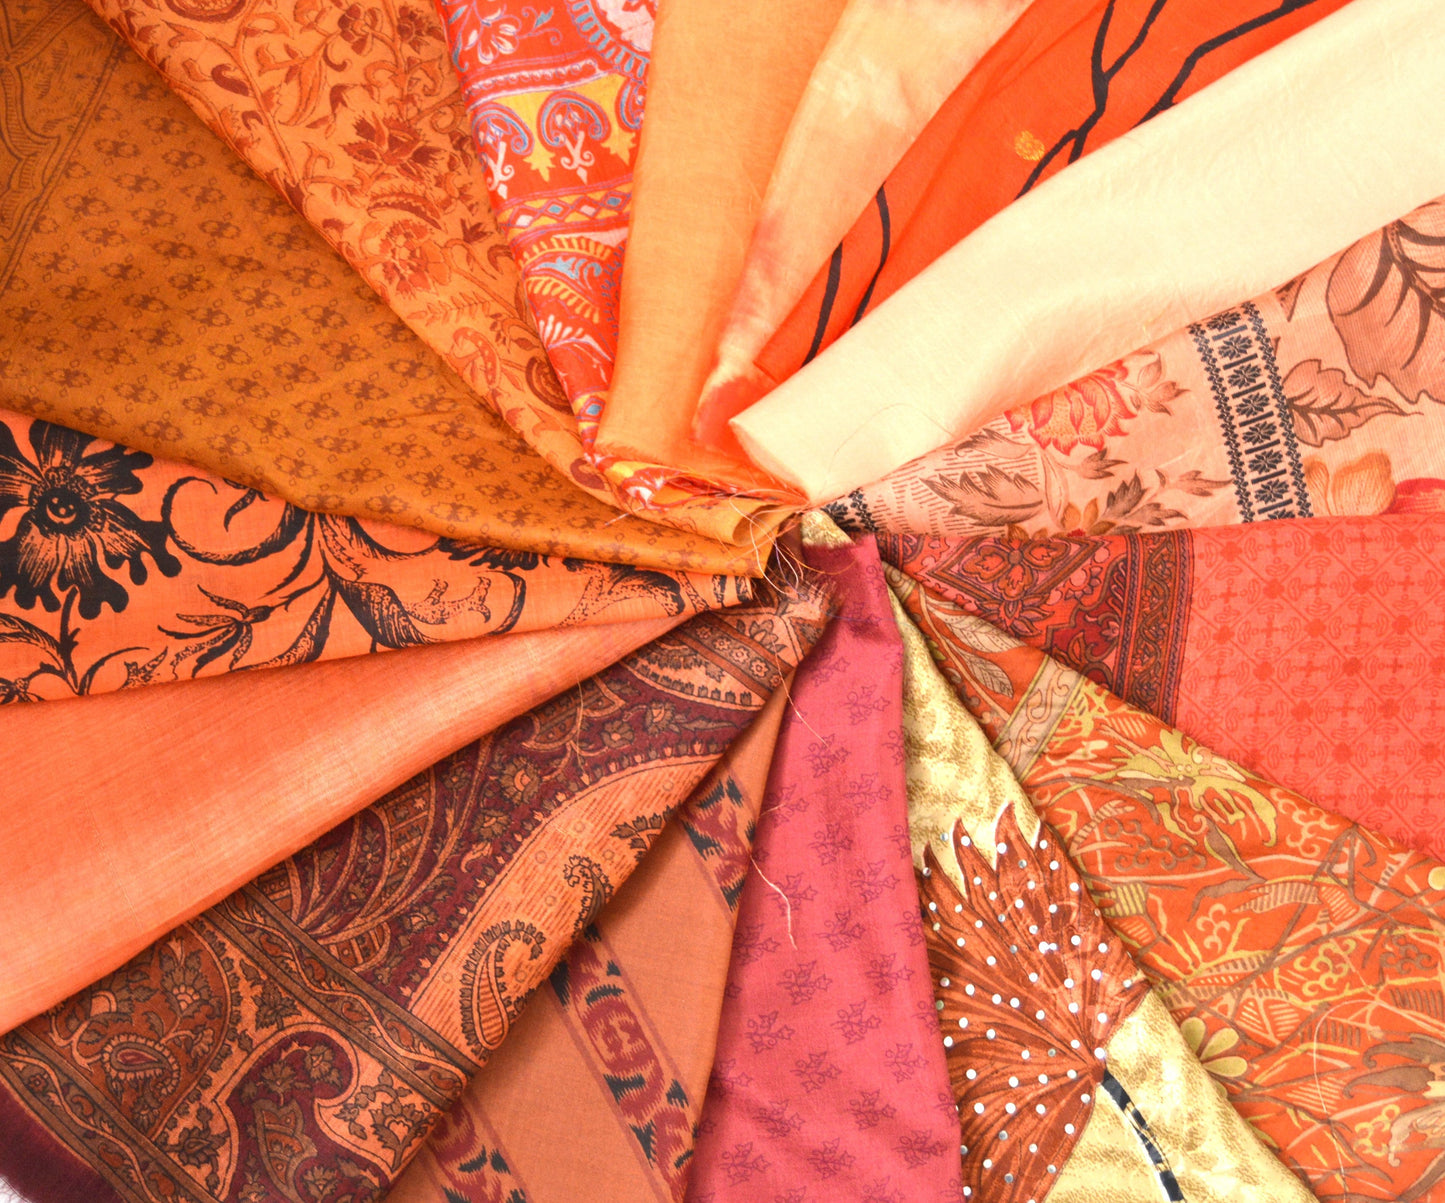 8 Inch x 16 Pieces Autumn Upcycled Vintage Sari Silk Squares